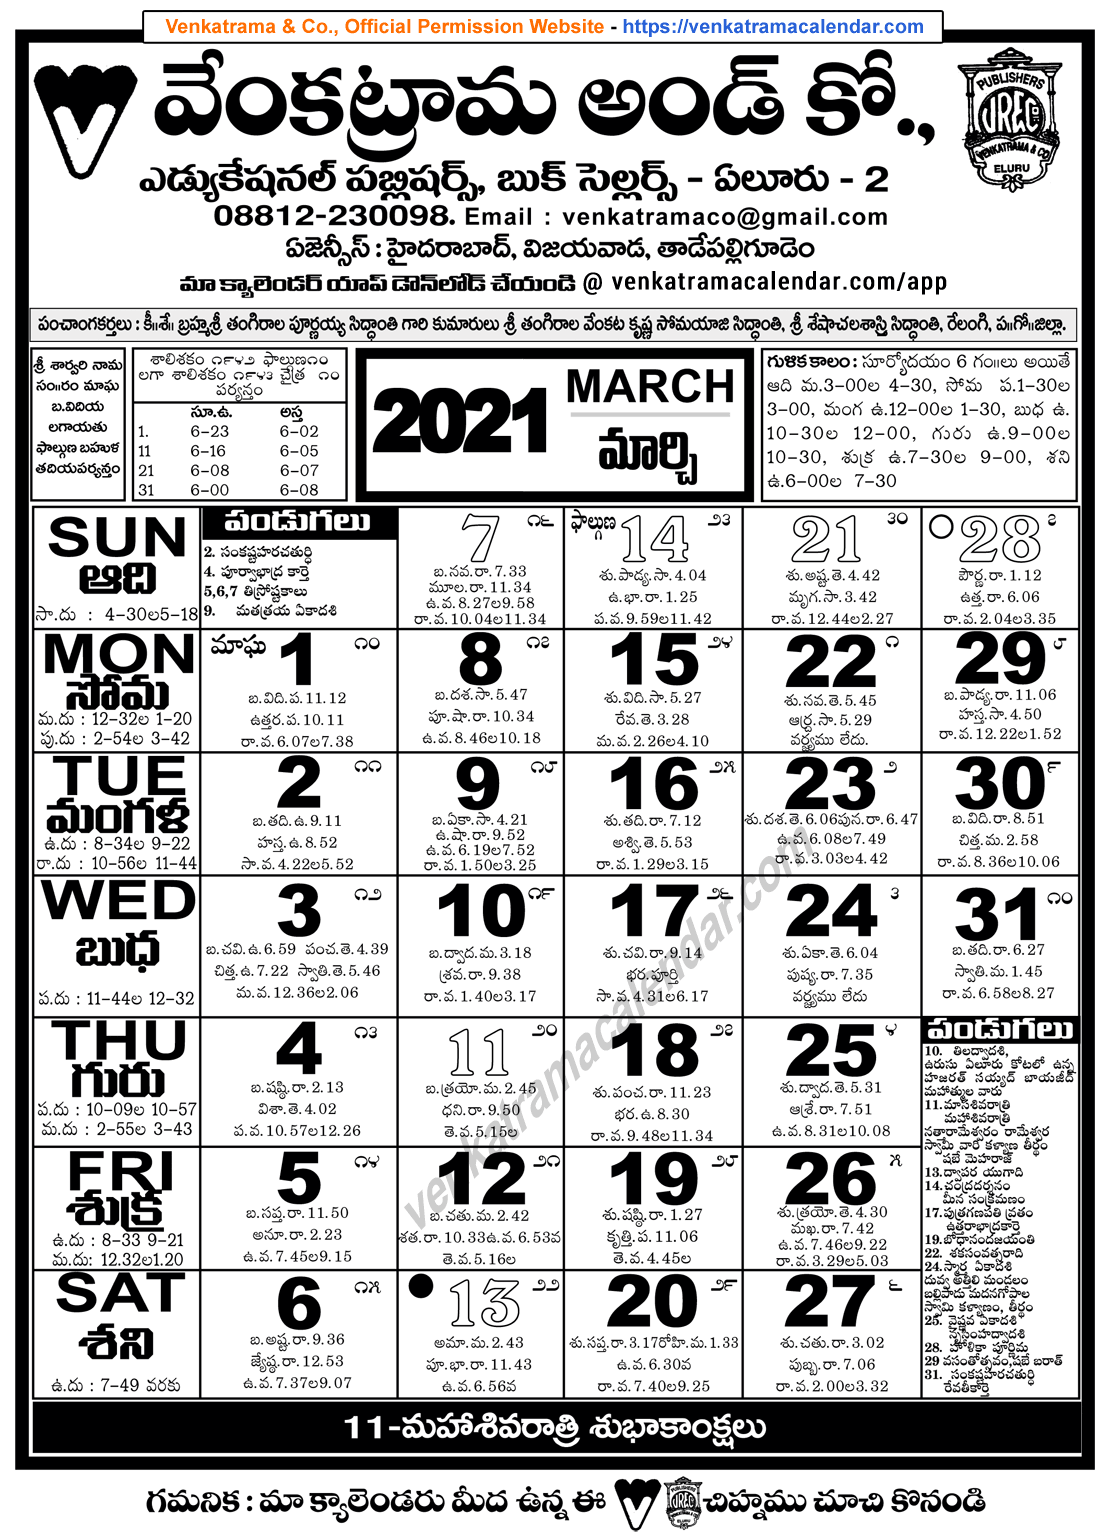 Venkatrama Co 2021 March Telugu Calendar - Venkatrama Telugu Calendar